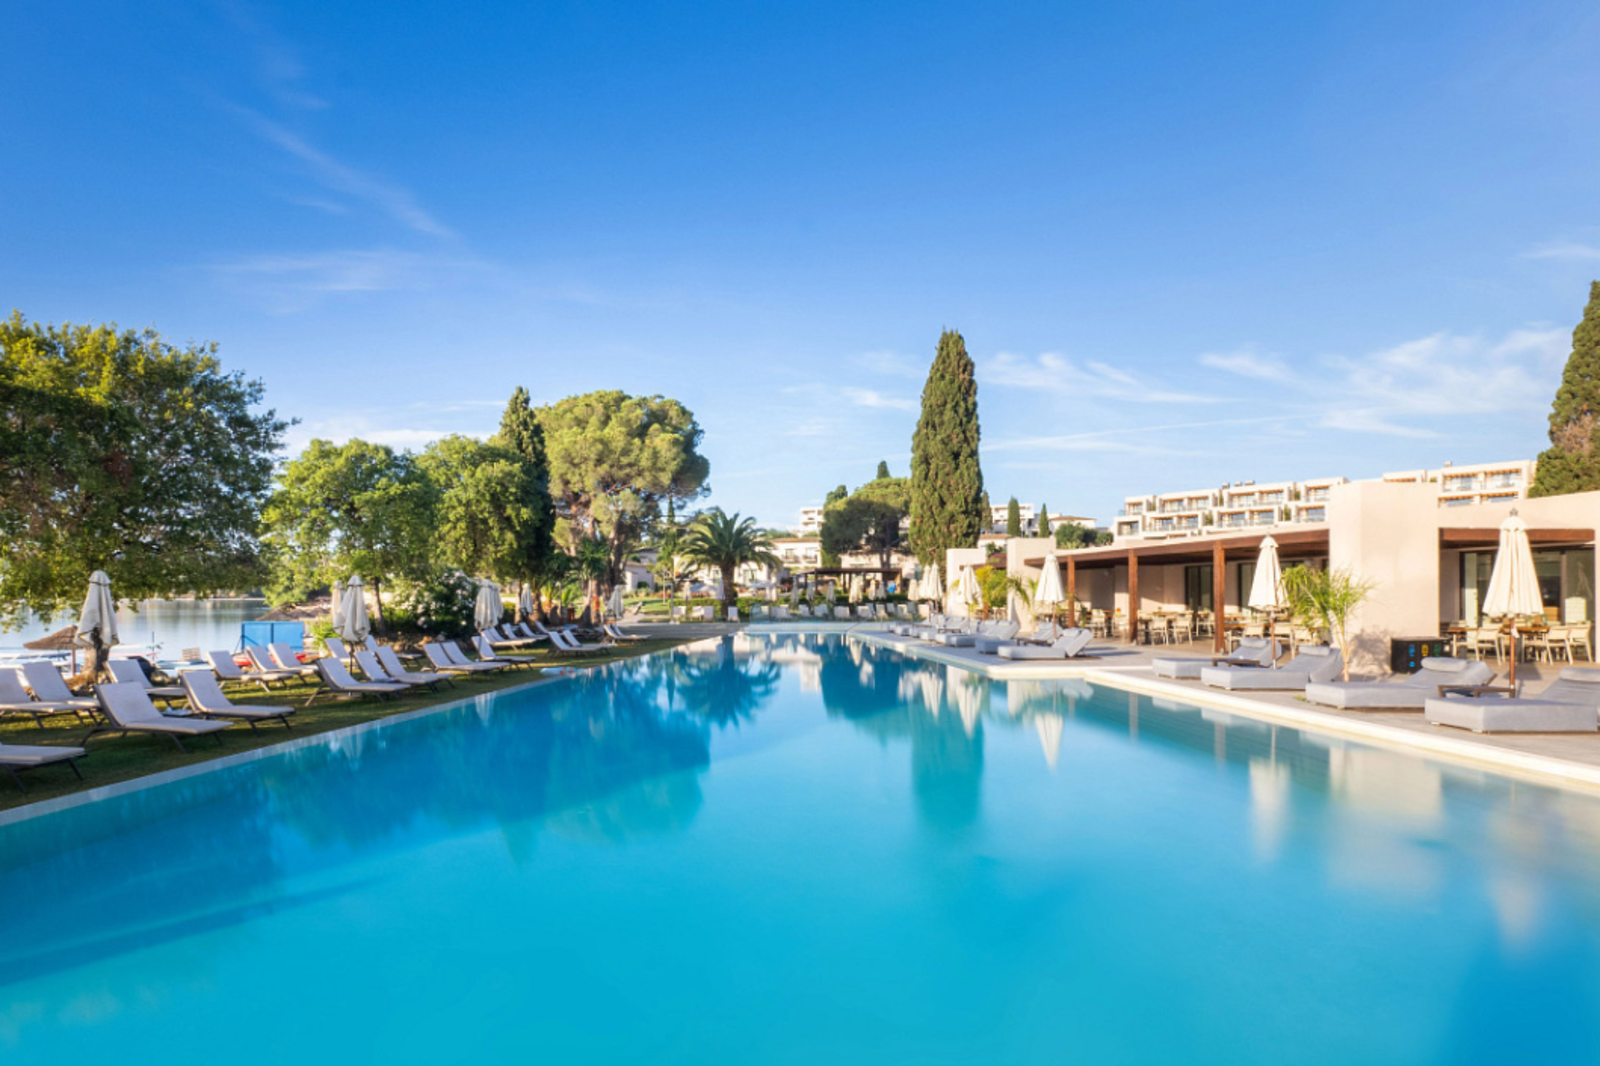 One of the pools at Dreams Corfu Resort & Spa